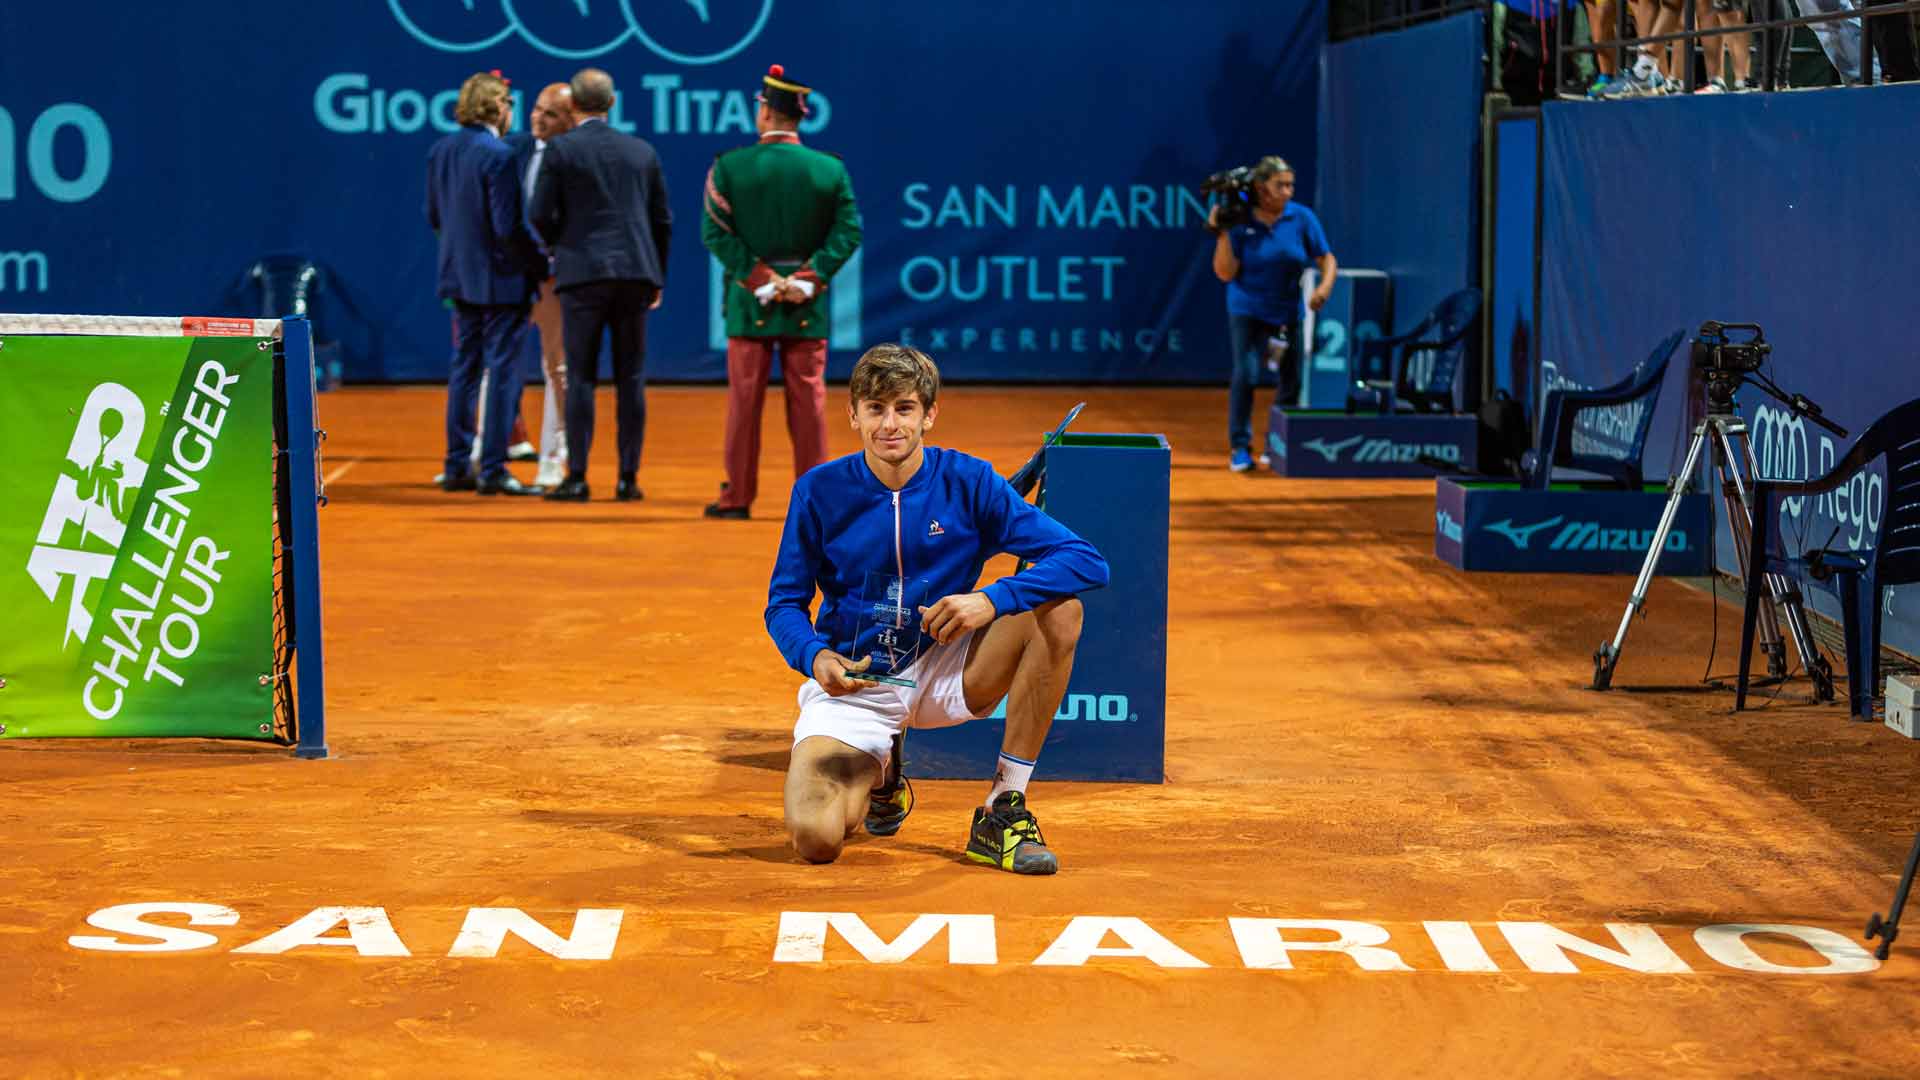 Pavel Kotov wins the San Marino Tennis Open.